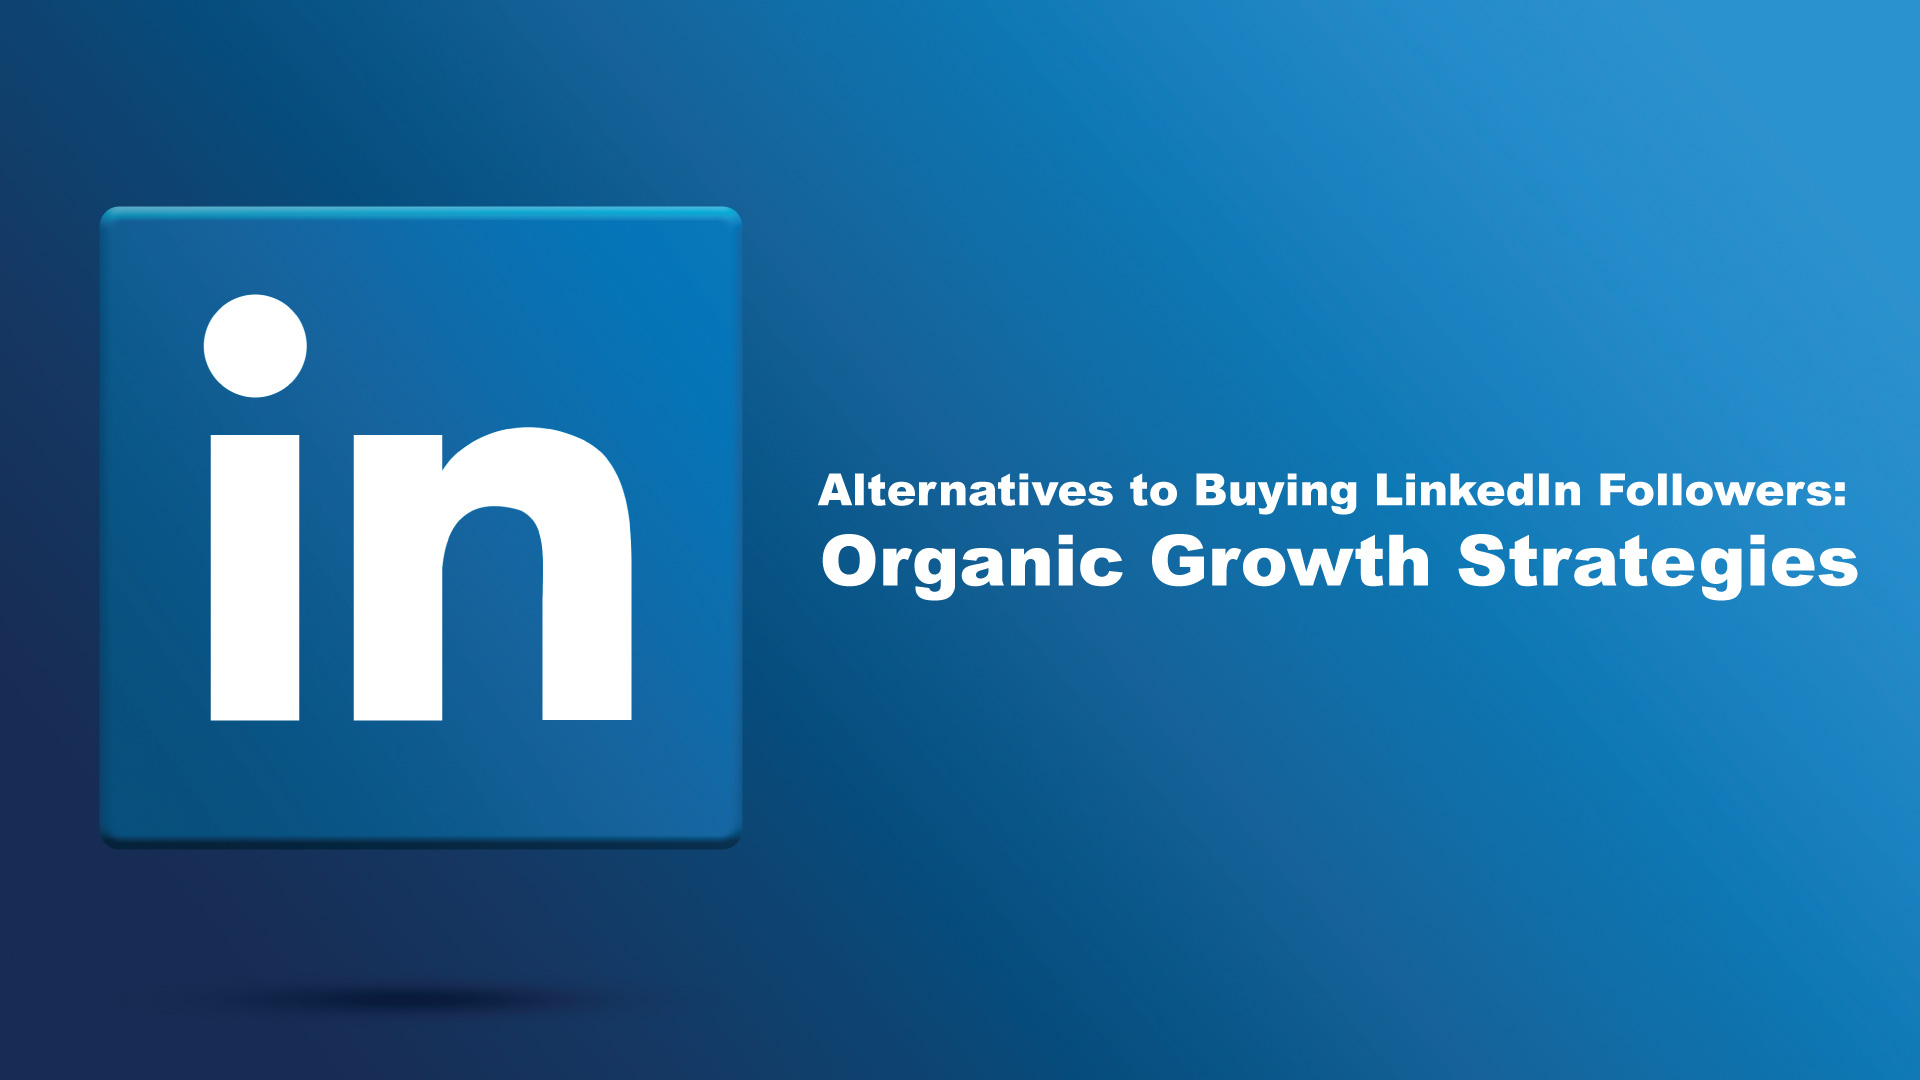 lternatives-to-Buying-LinkedIn-Followers-Organic-Growth-Strategies-22